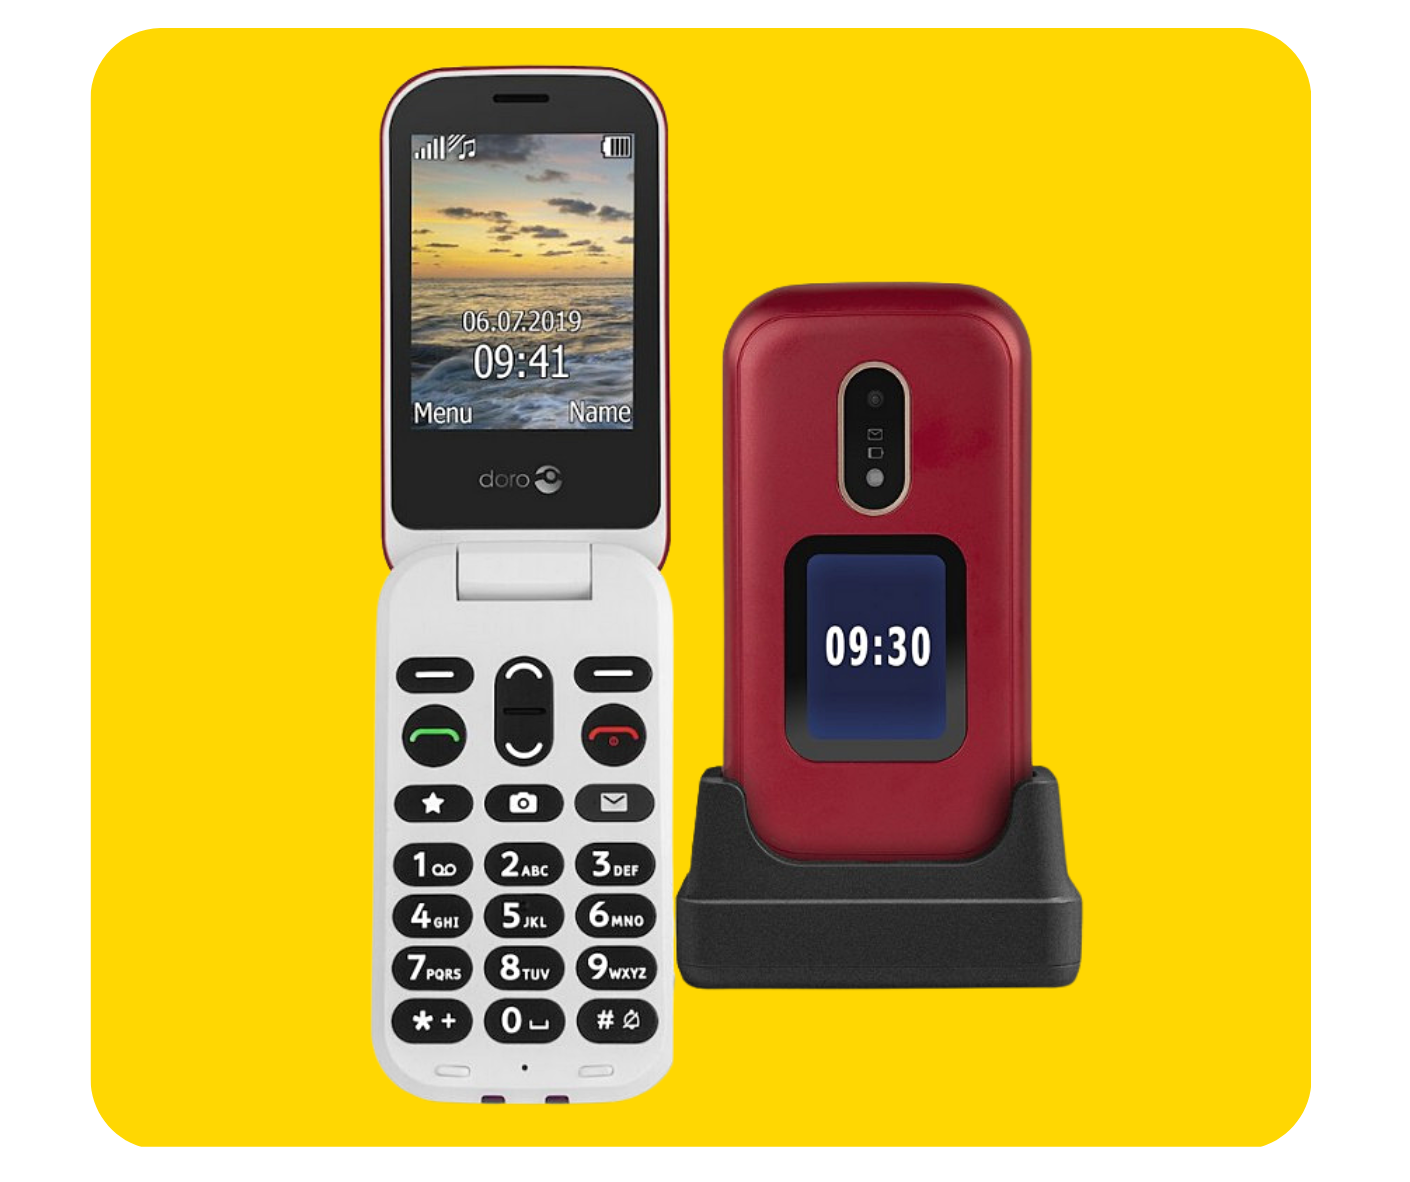 Téléphone Portable Smartphone - Samsung Galaxy A03s- Mémoire 32 Go – Ram 3  Go – Ecran 6.5″- Photo 13 Mpx -KE0010 - Sodishop